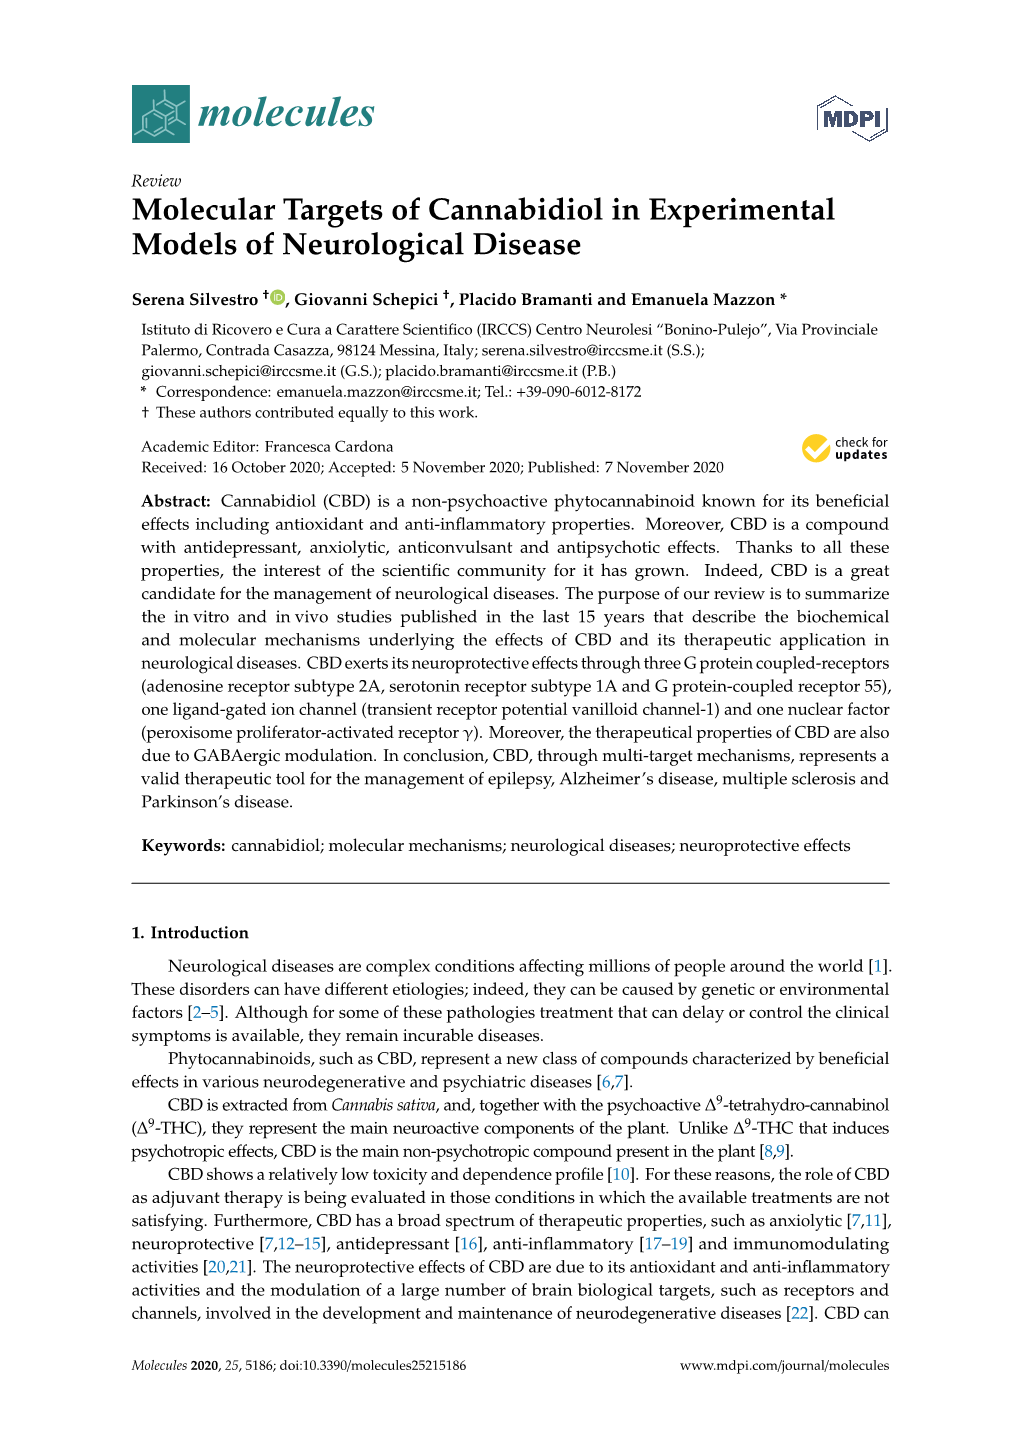 Molecular Targets of Cannabidiol in Experimental Models of Neurological Disease